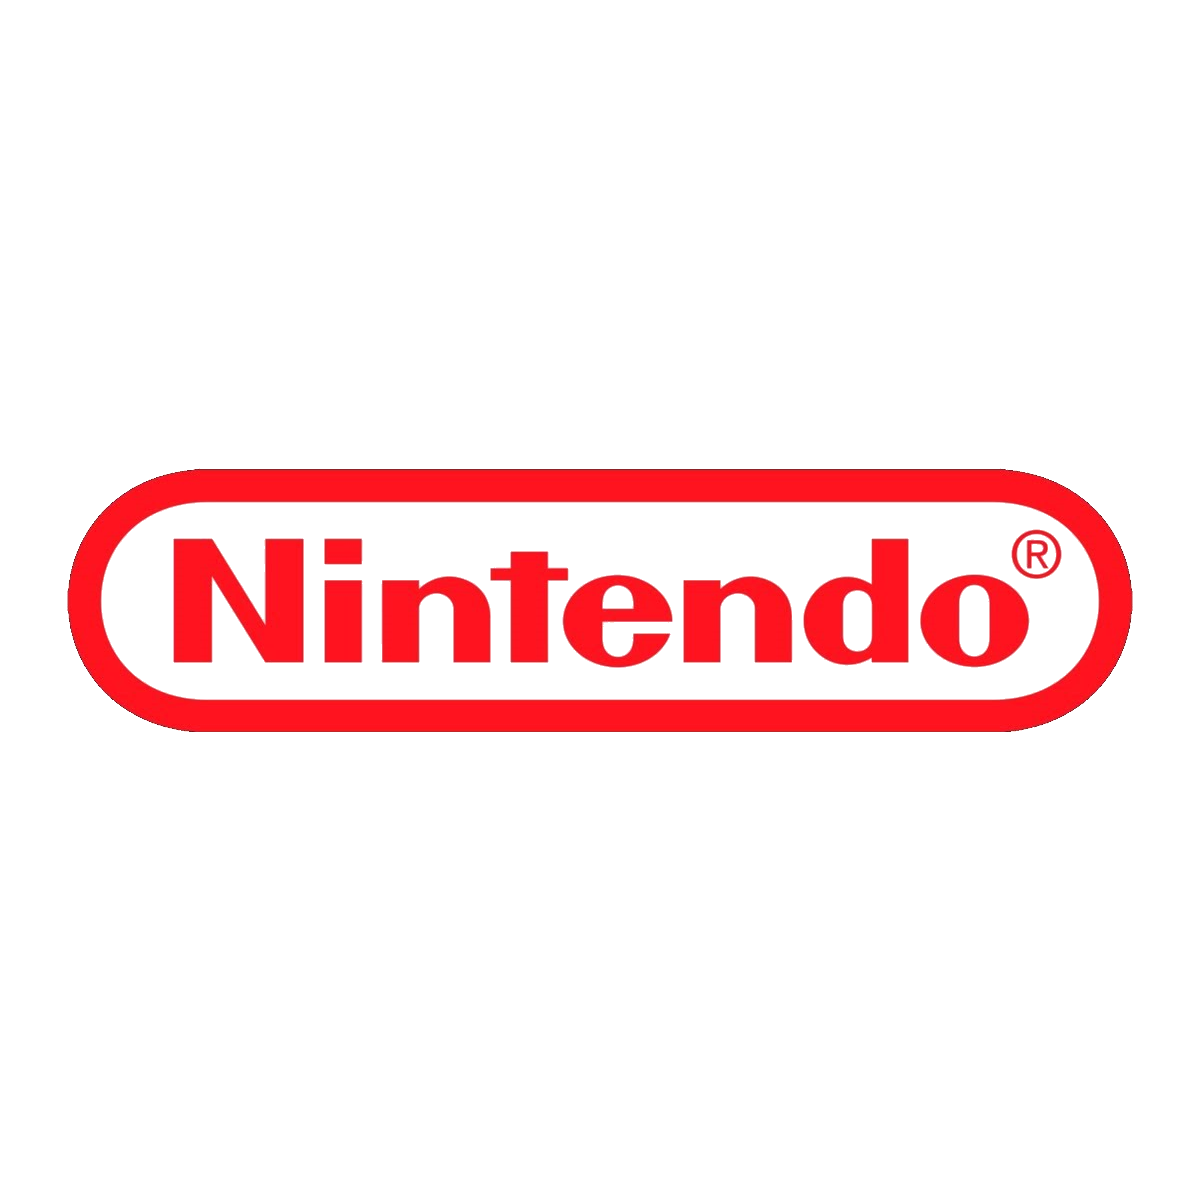 Nintendo The Sequel To The Original Puyo Puyo Returns In Sega Ages For Nintendo Switch.